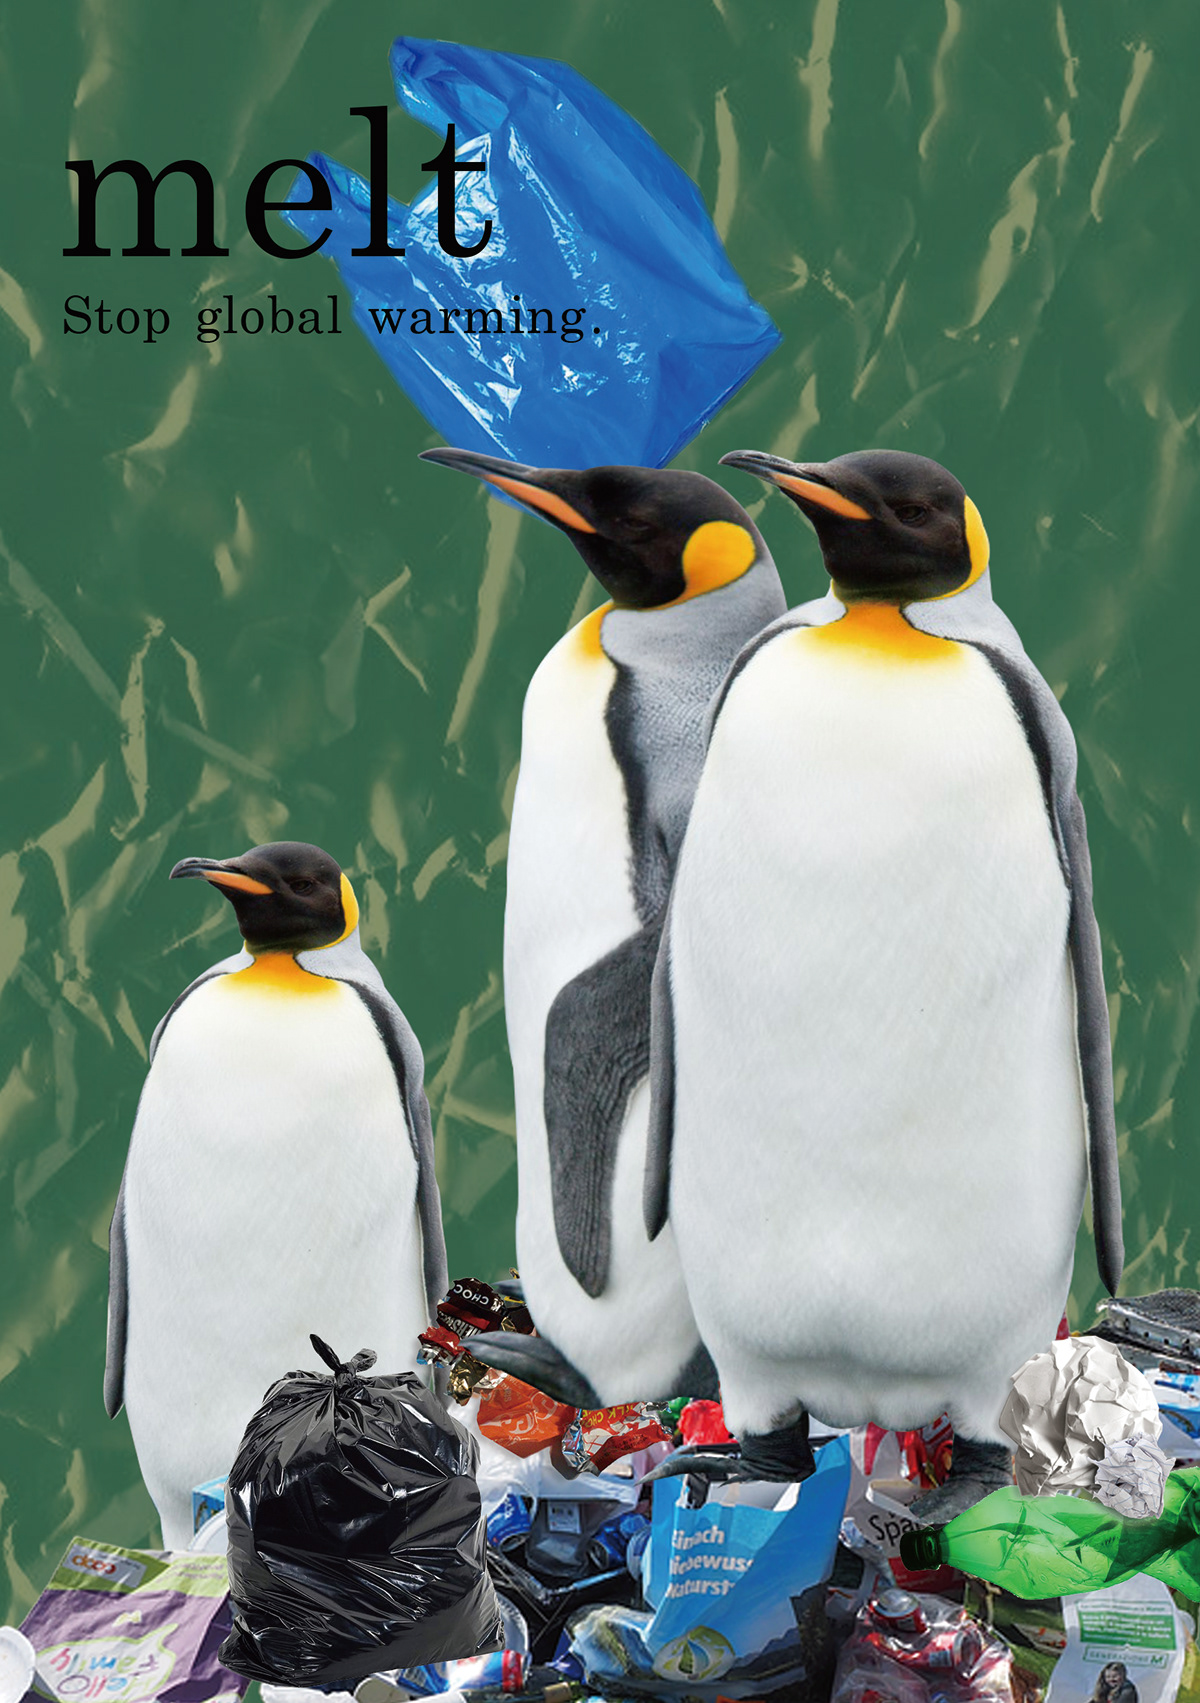 global warming Melt post card poster stop global warming 지구온난화